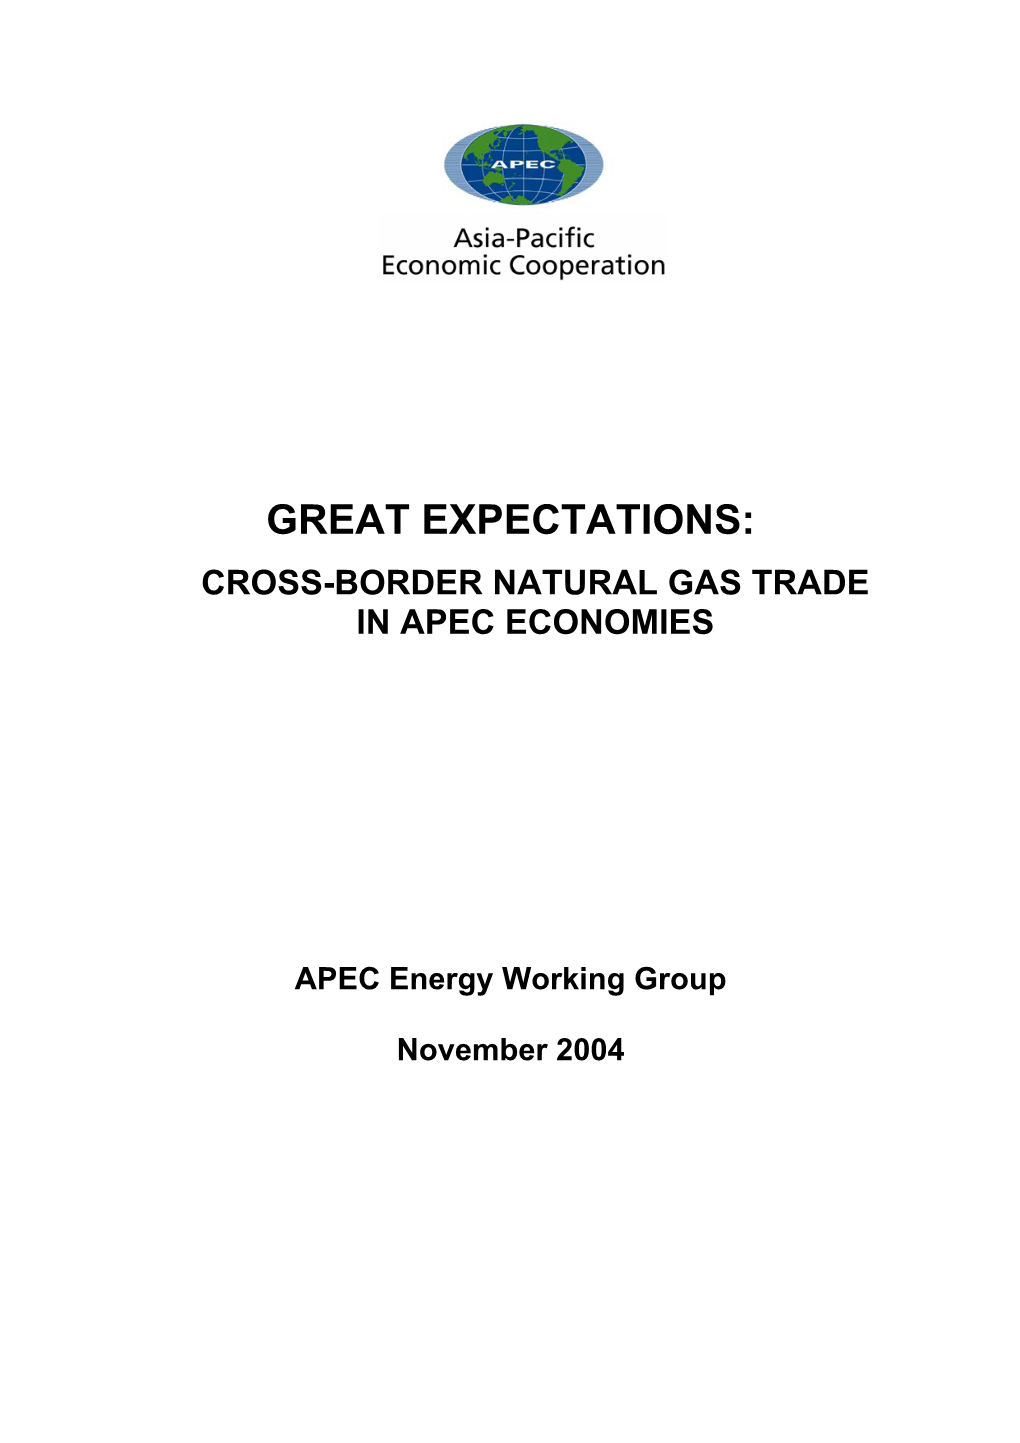 Cross-Border Natural Gas Trade in Apec Economies